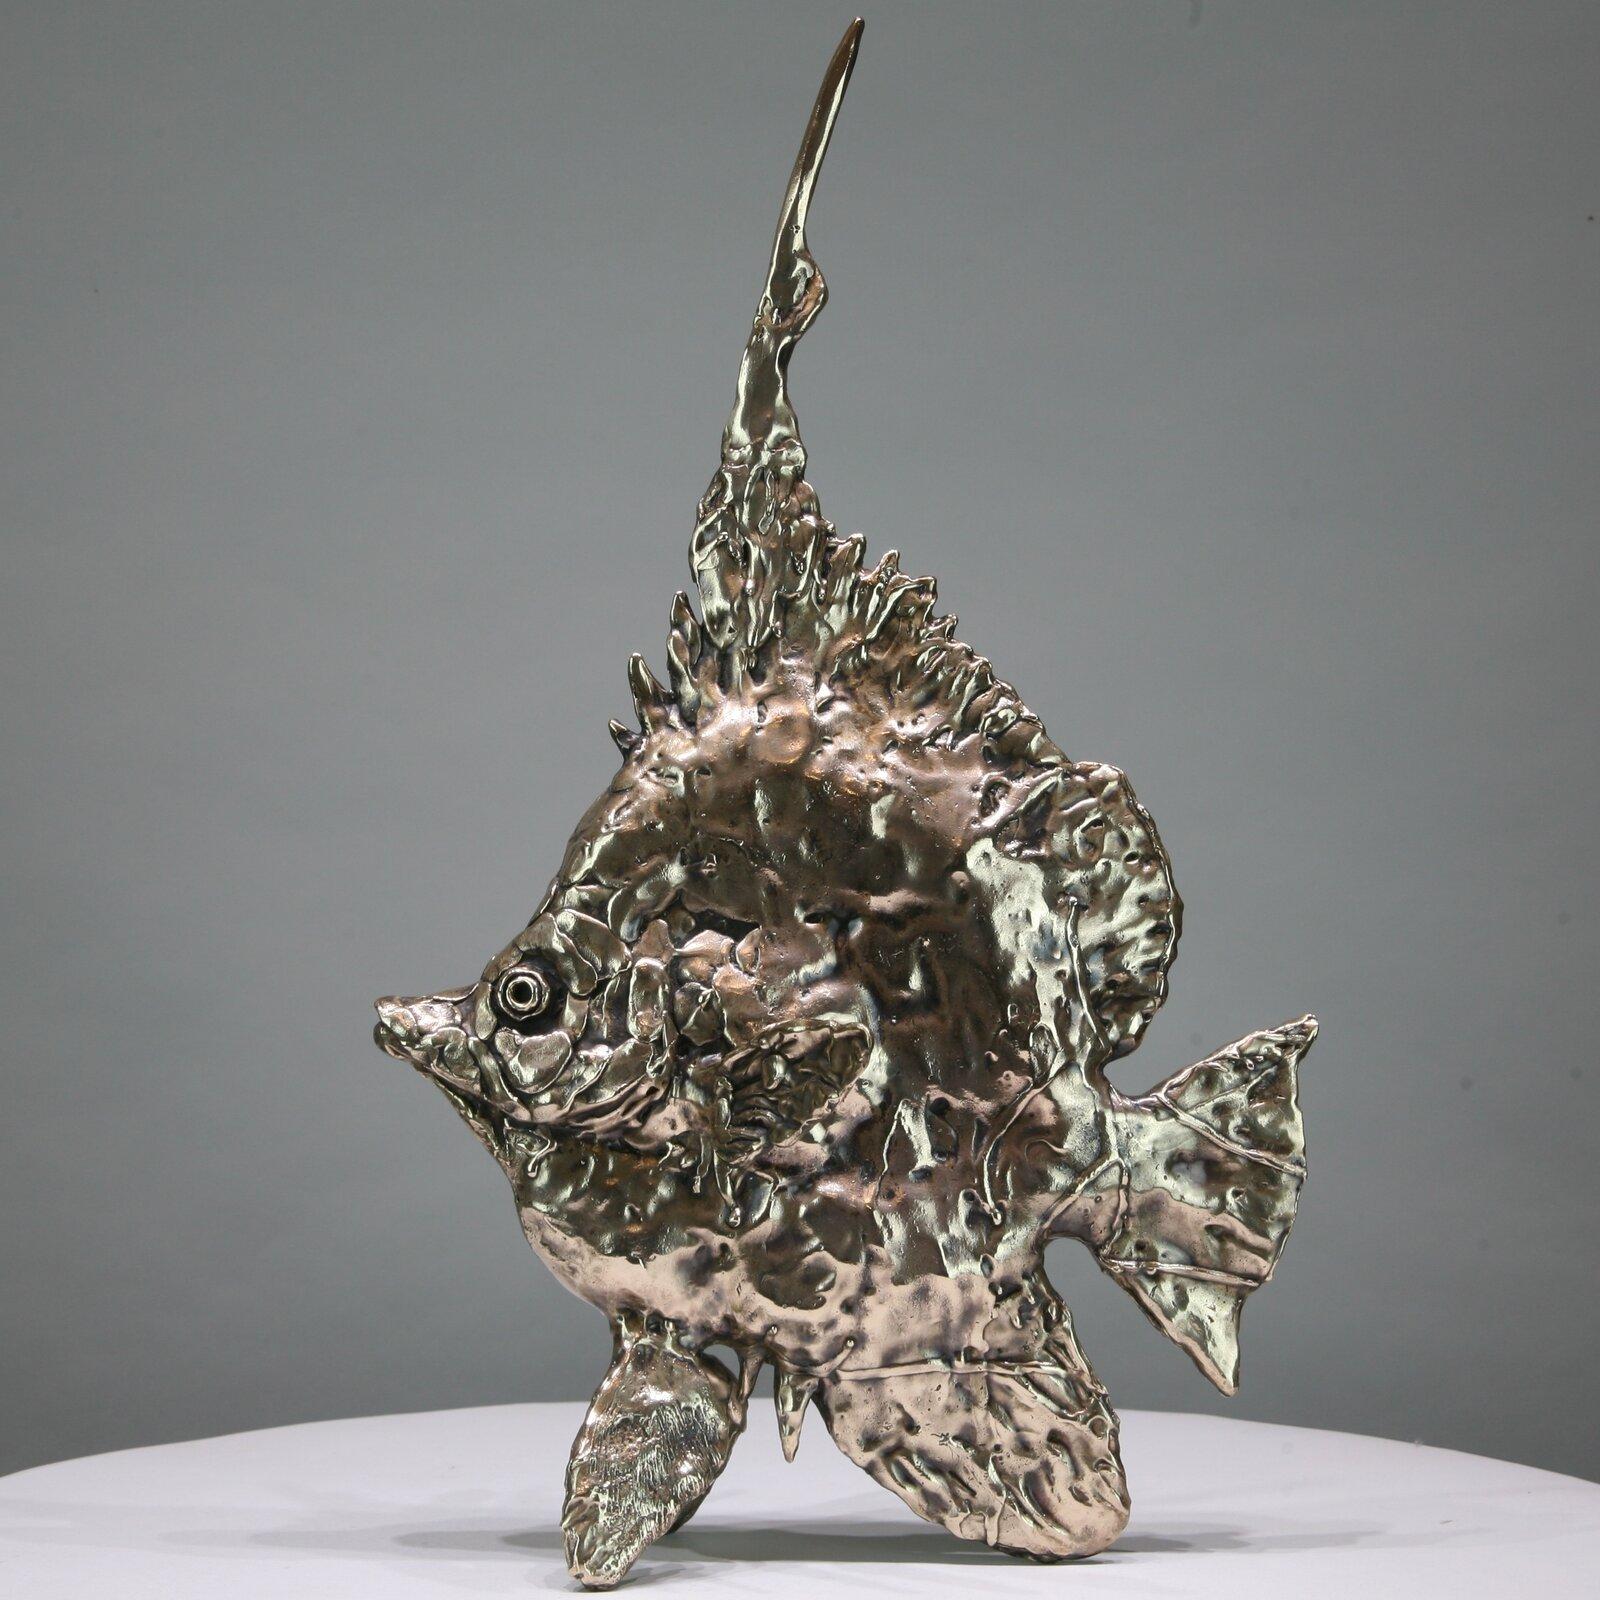 Andrzej Szymczyk Figurative Sculpture - Sea Angel Fish-original bronze wildlife sculpture-artwork-contemporary Art